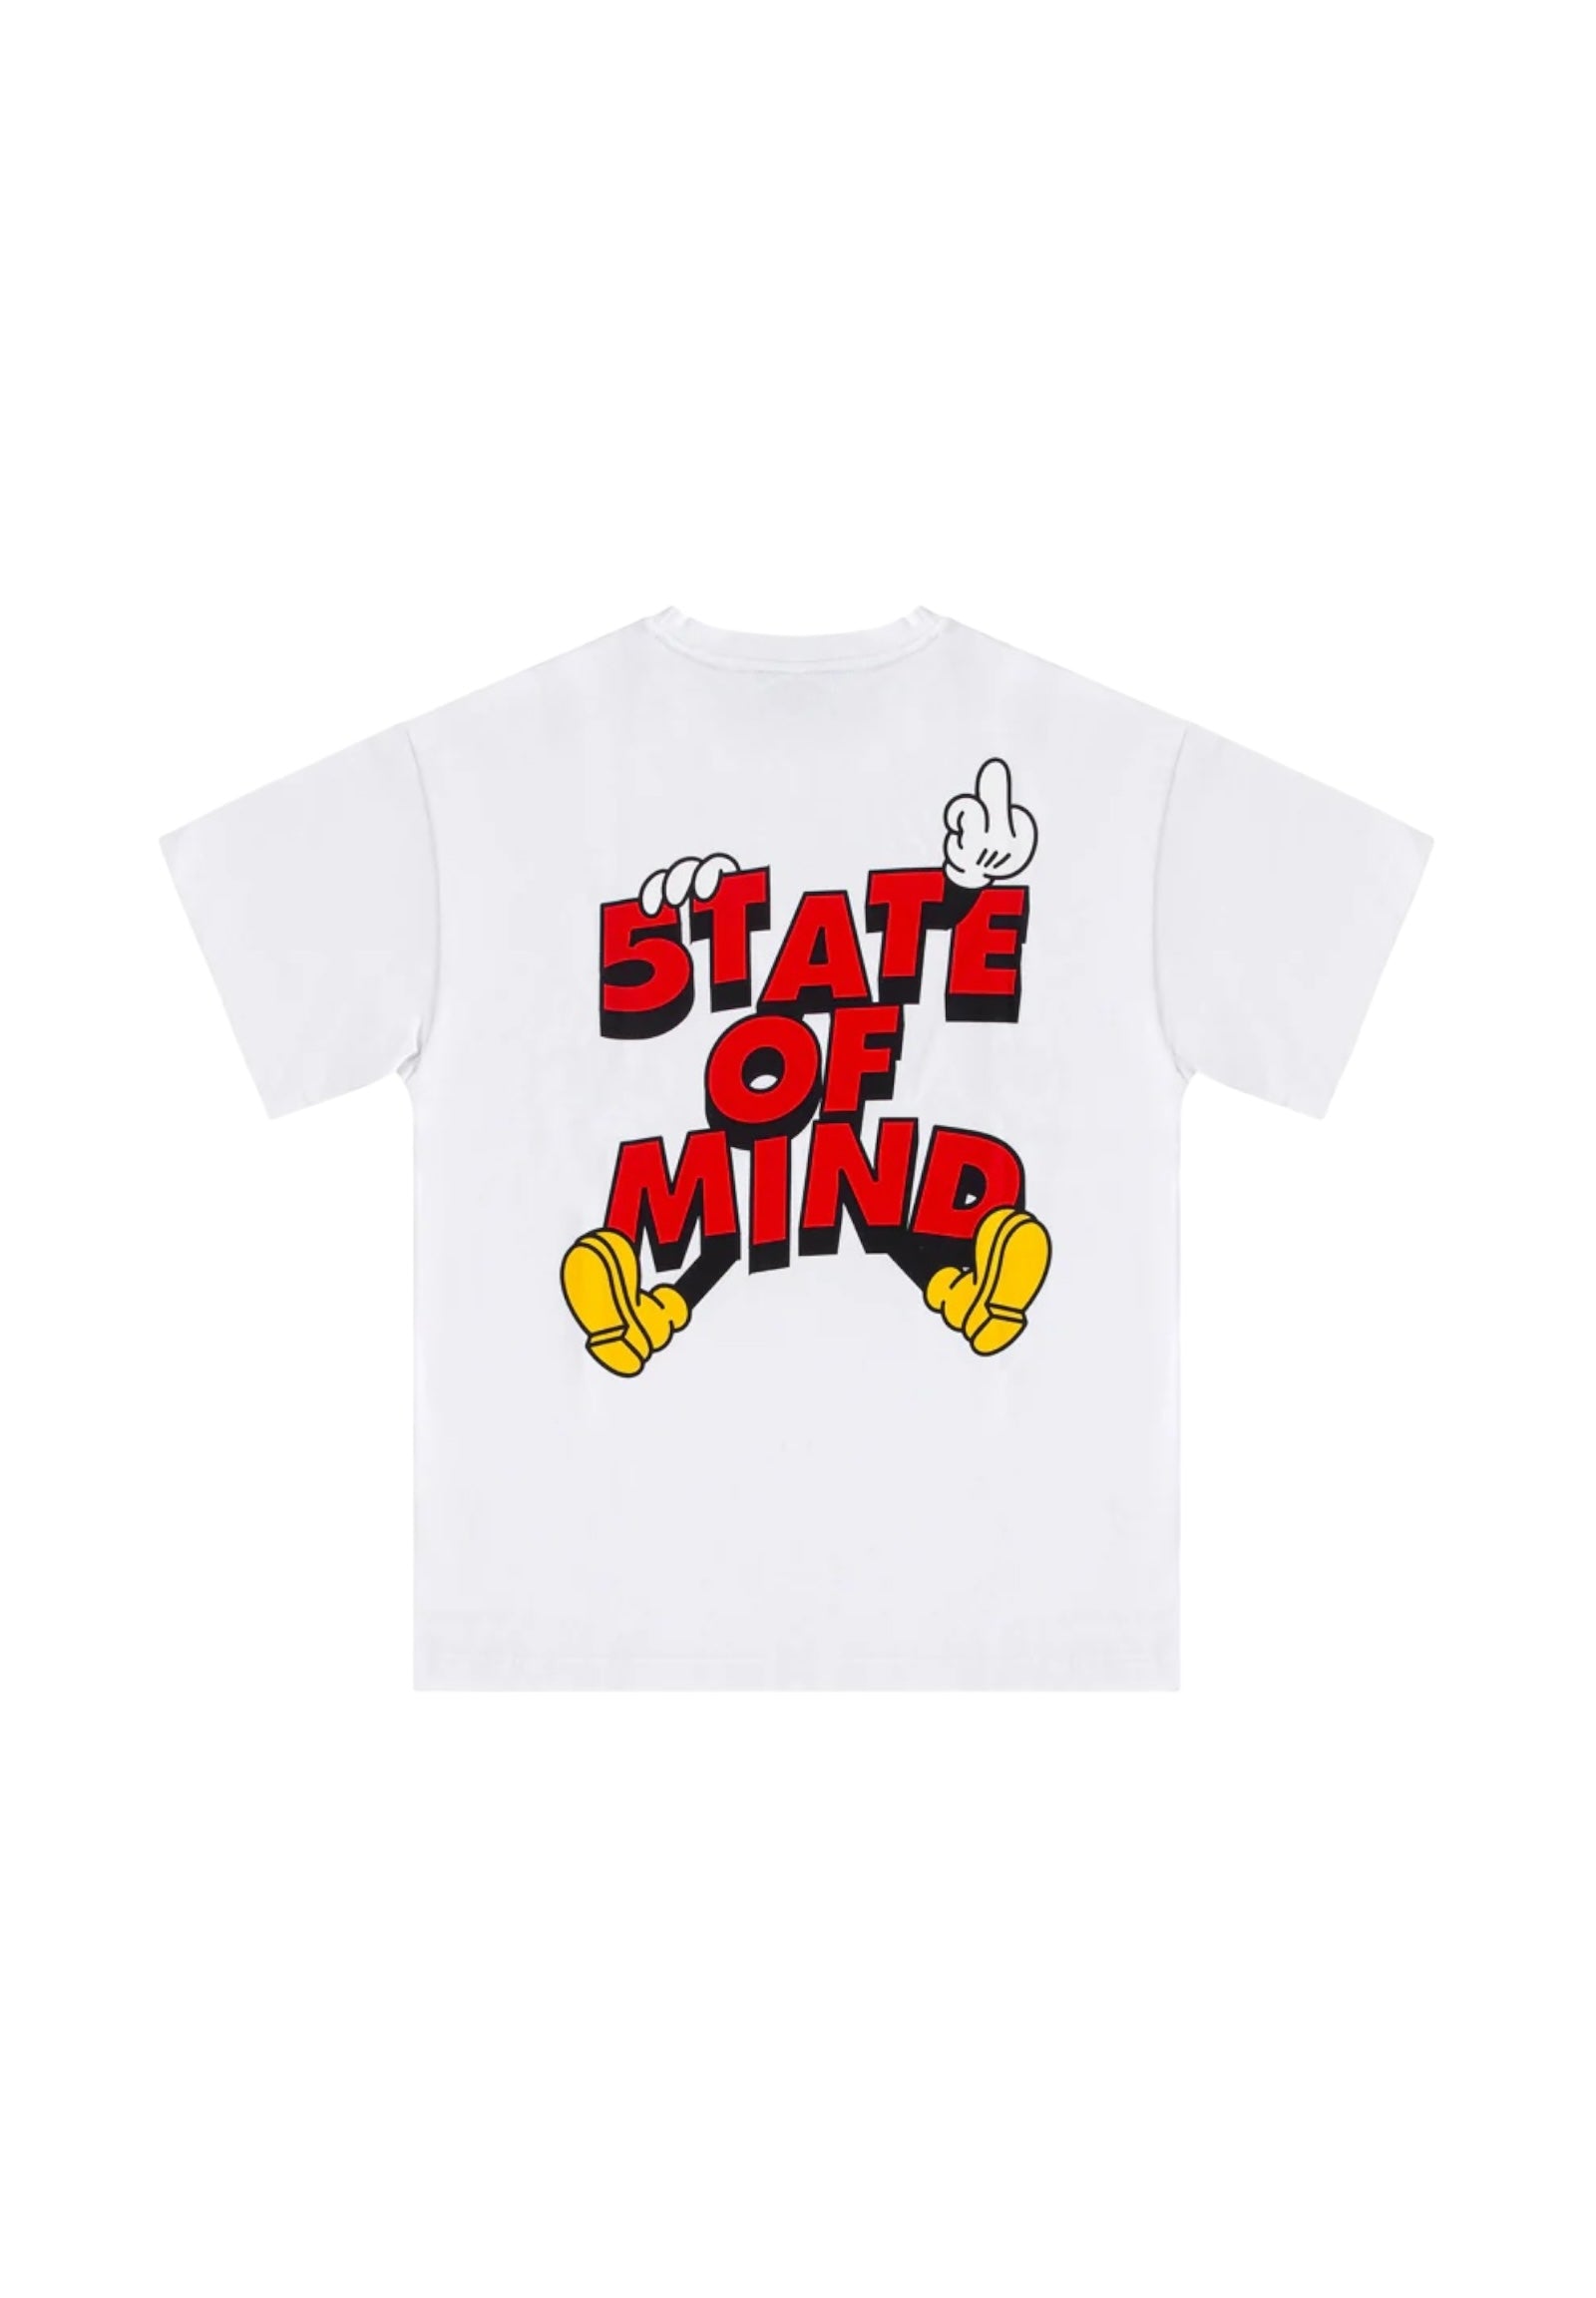 5tate Of Mind T-Shirt* Tssom4125 White